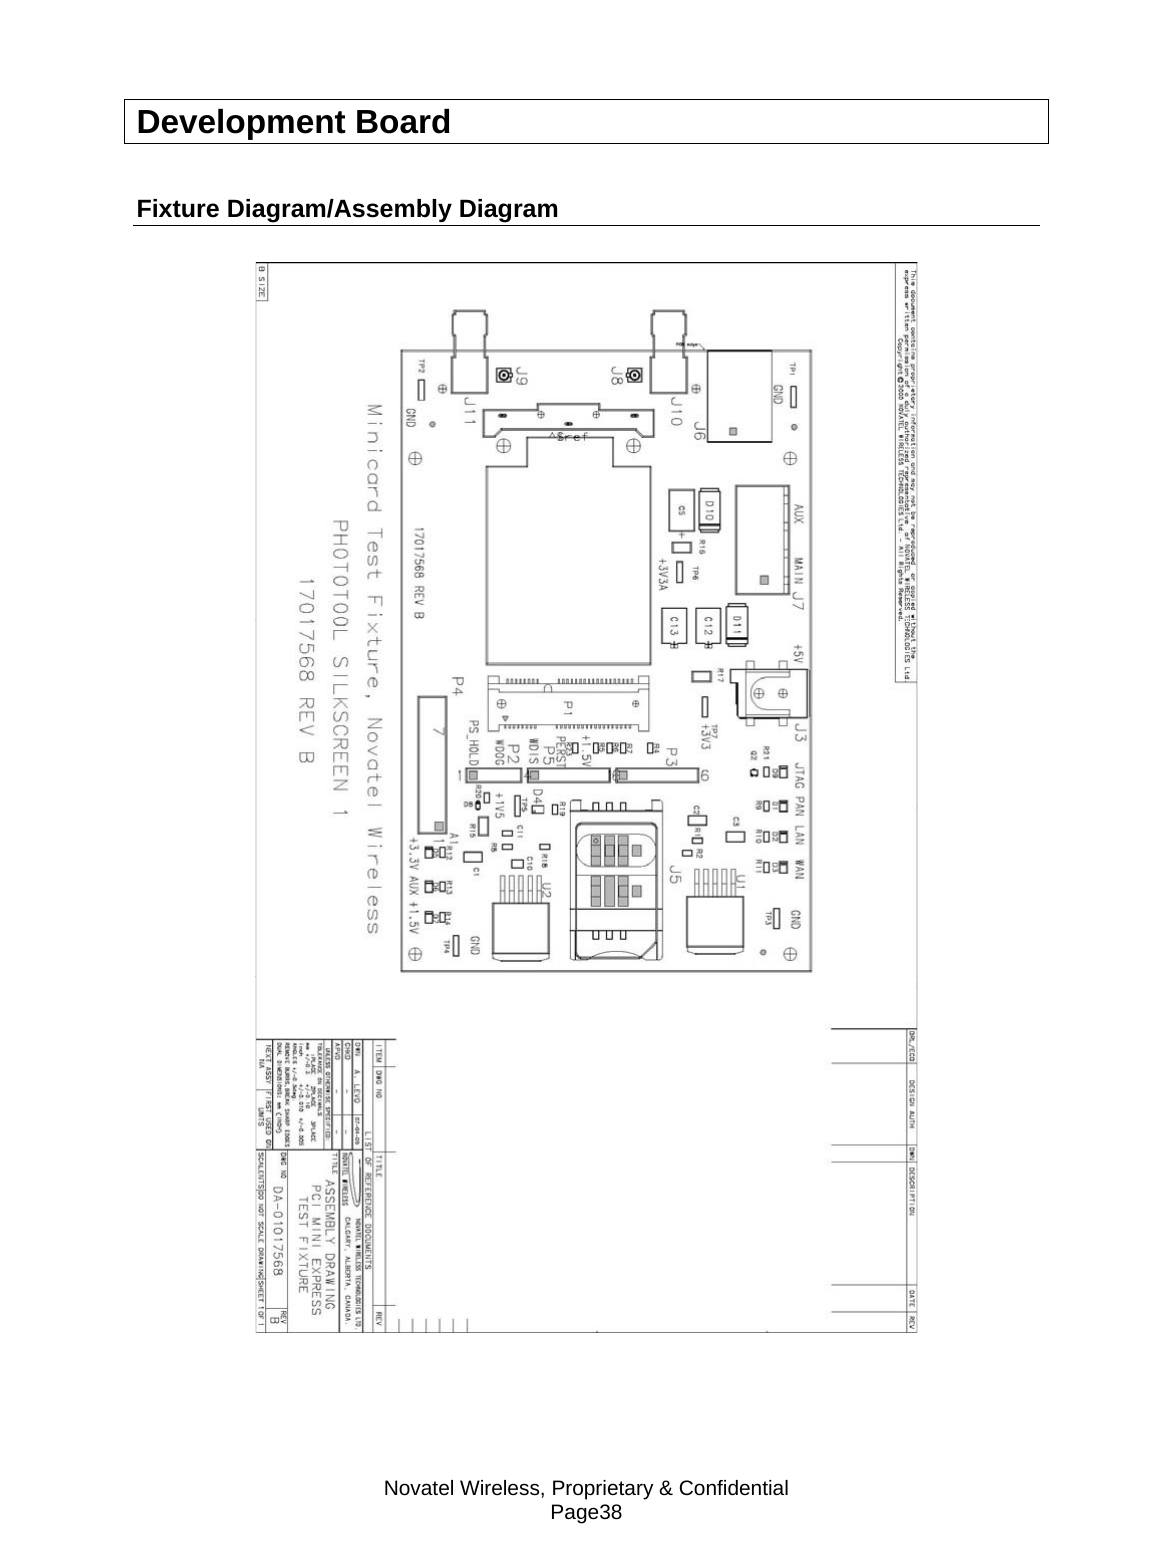 Novatel Wireless, Proprietary &amp; Confidential Page38 Development Board Fixture Diagram/Assembly Diagram  